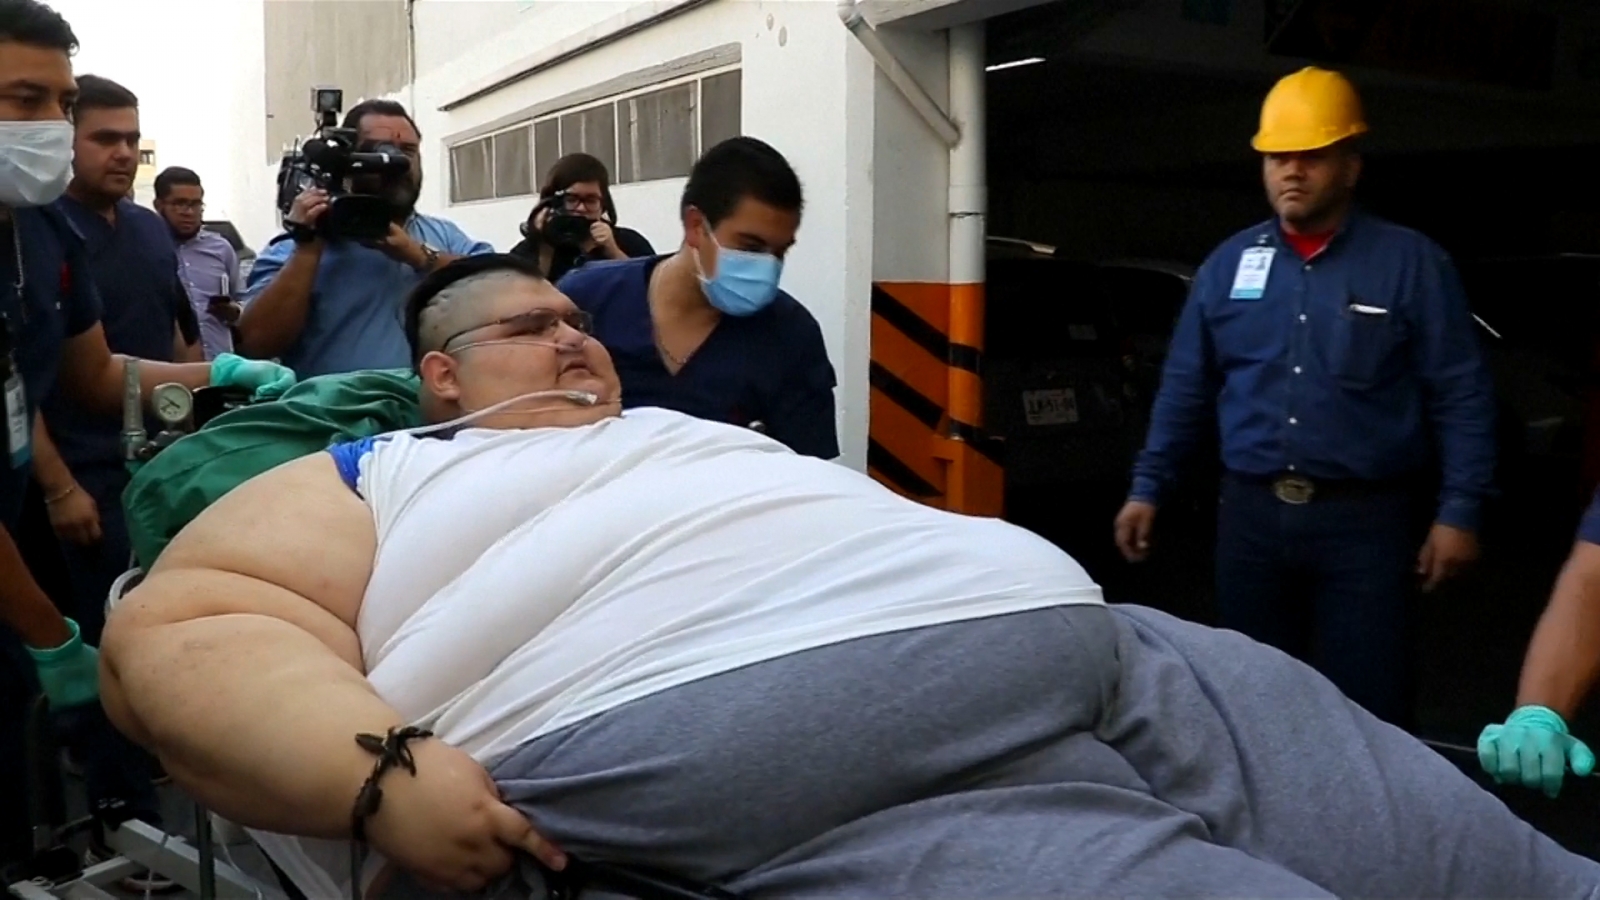 World's heaviest man Juan Pedro Franco undergoes weight loss surgery